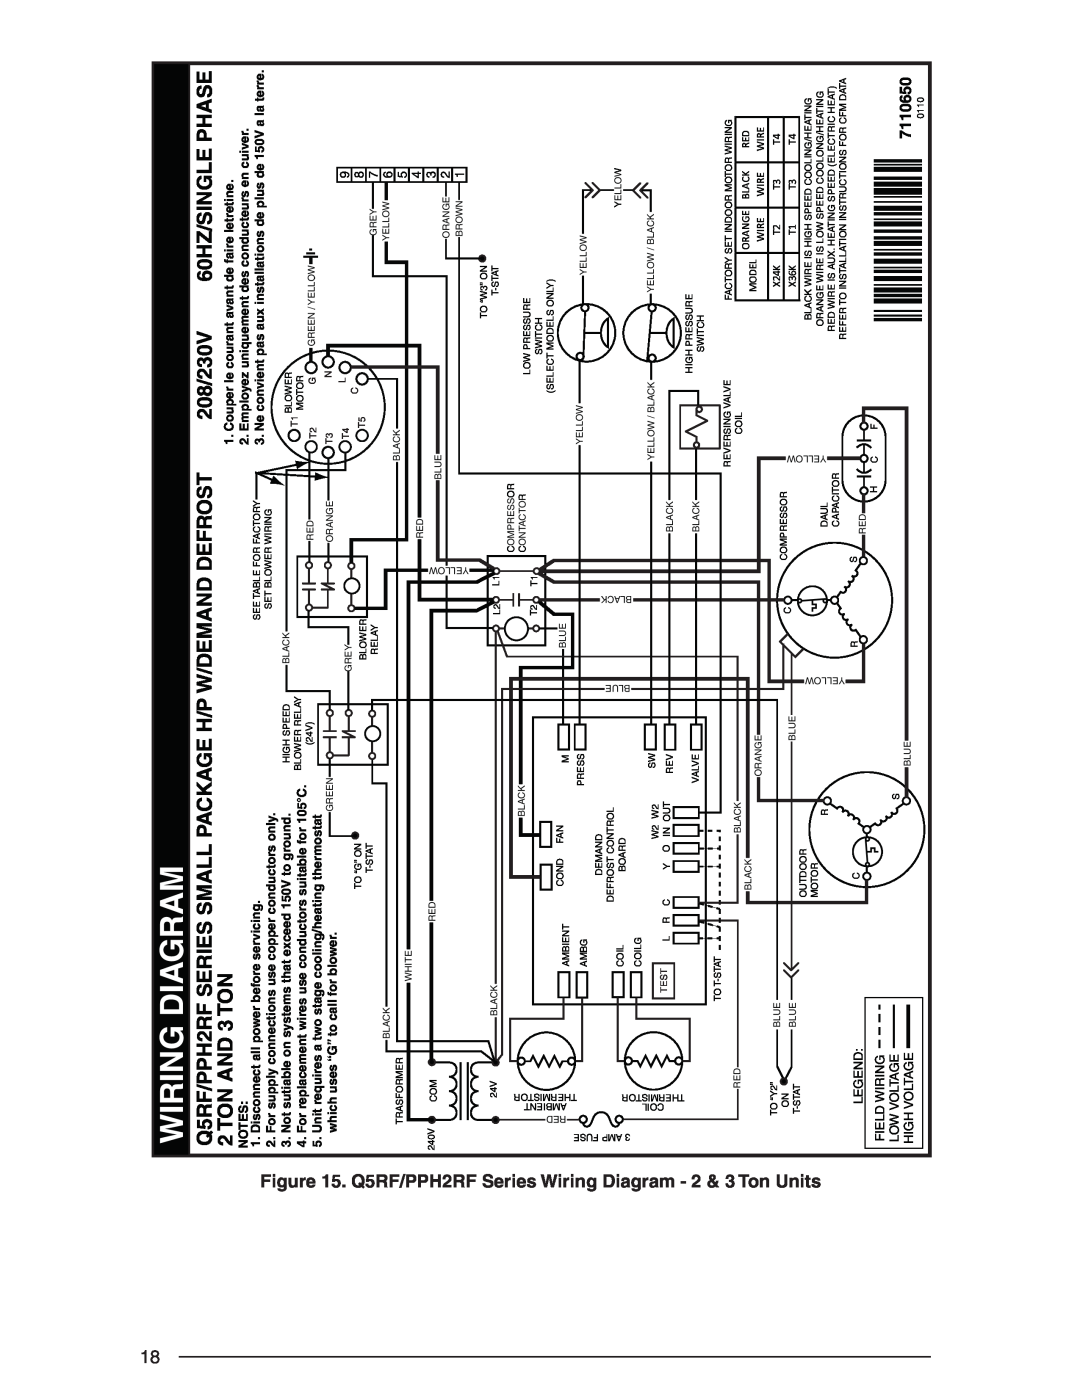 Acnodes Q5RF SERIES user manual Wiring Diagram, ¢711065«¤, 208/230V, 60HZ/SINGLE PHASE, TON AND 3 TON, 7110650 